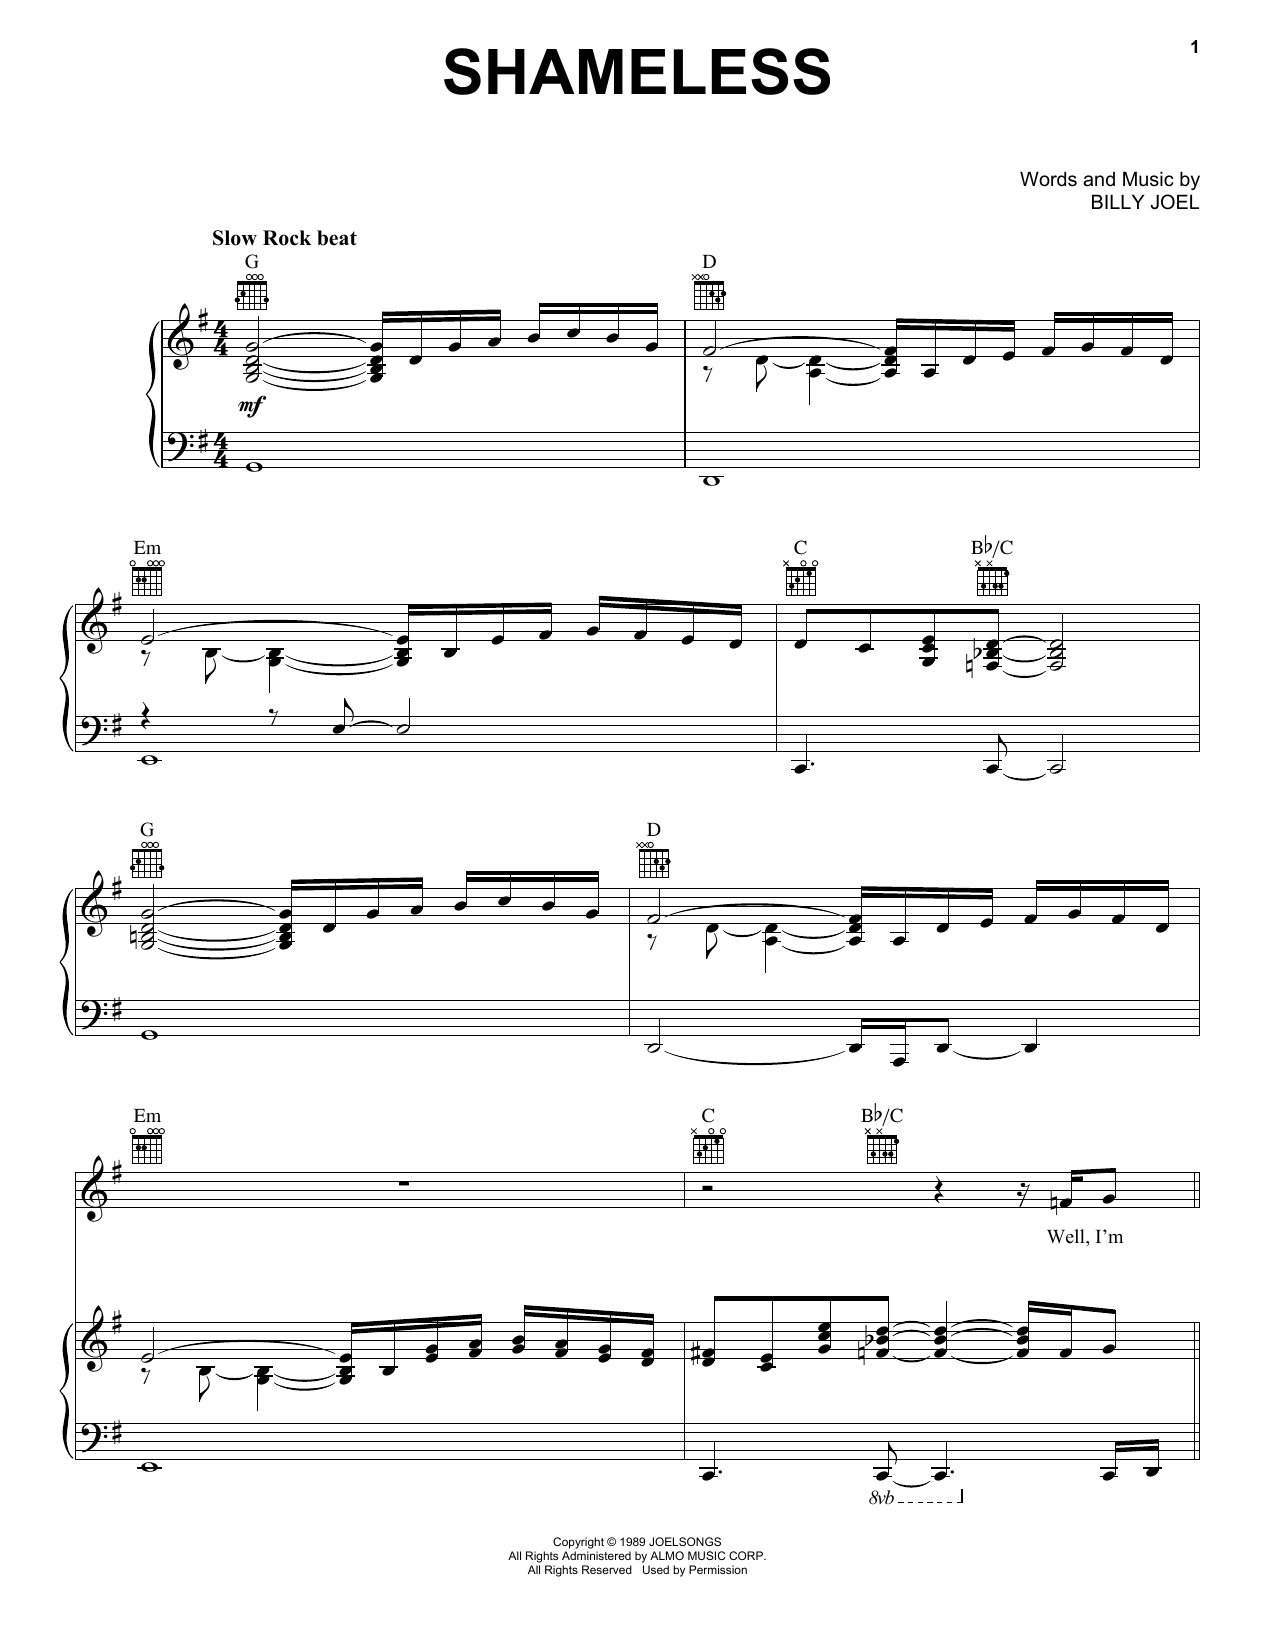 Billy Joel Shameless Sheet Music Notes & Chords for Easy Guitar - Download or Print PDF